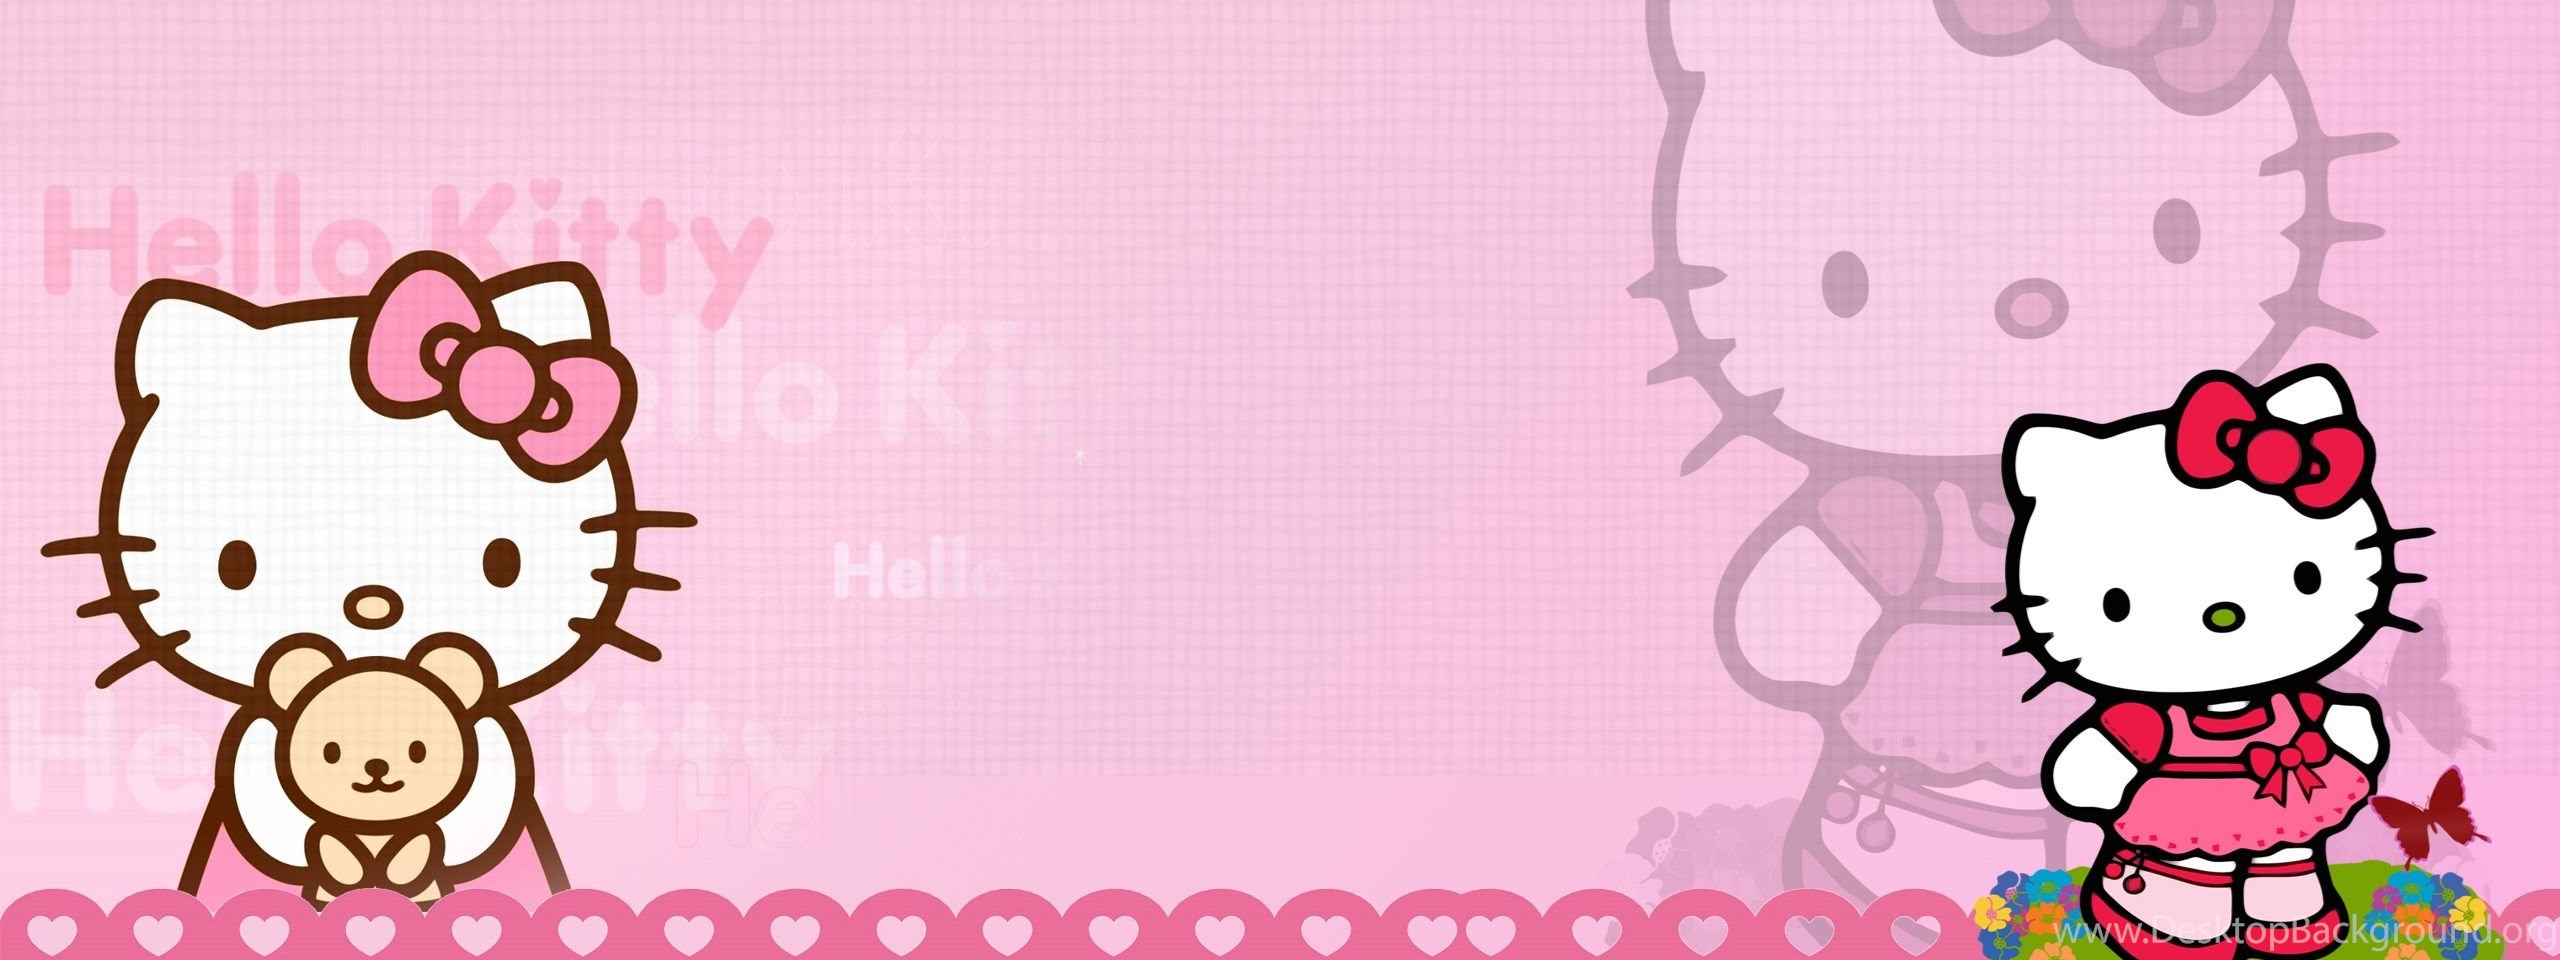 Download Hello Kitty Dual Monitor Wallp Brh Deviantart Wallpapers ...